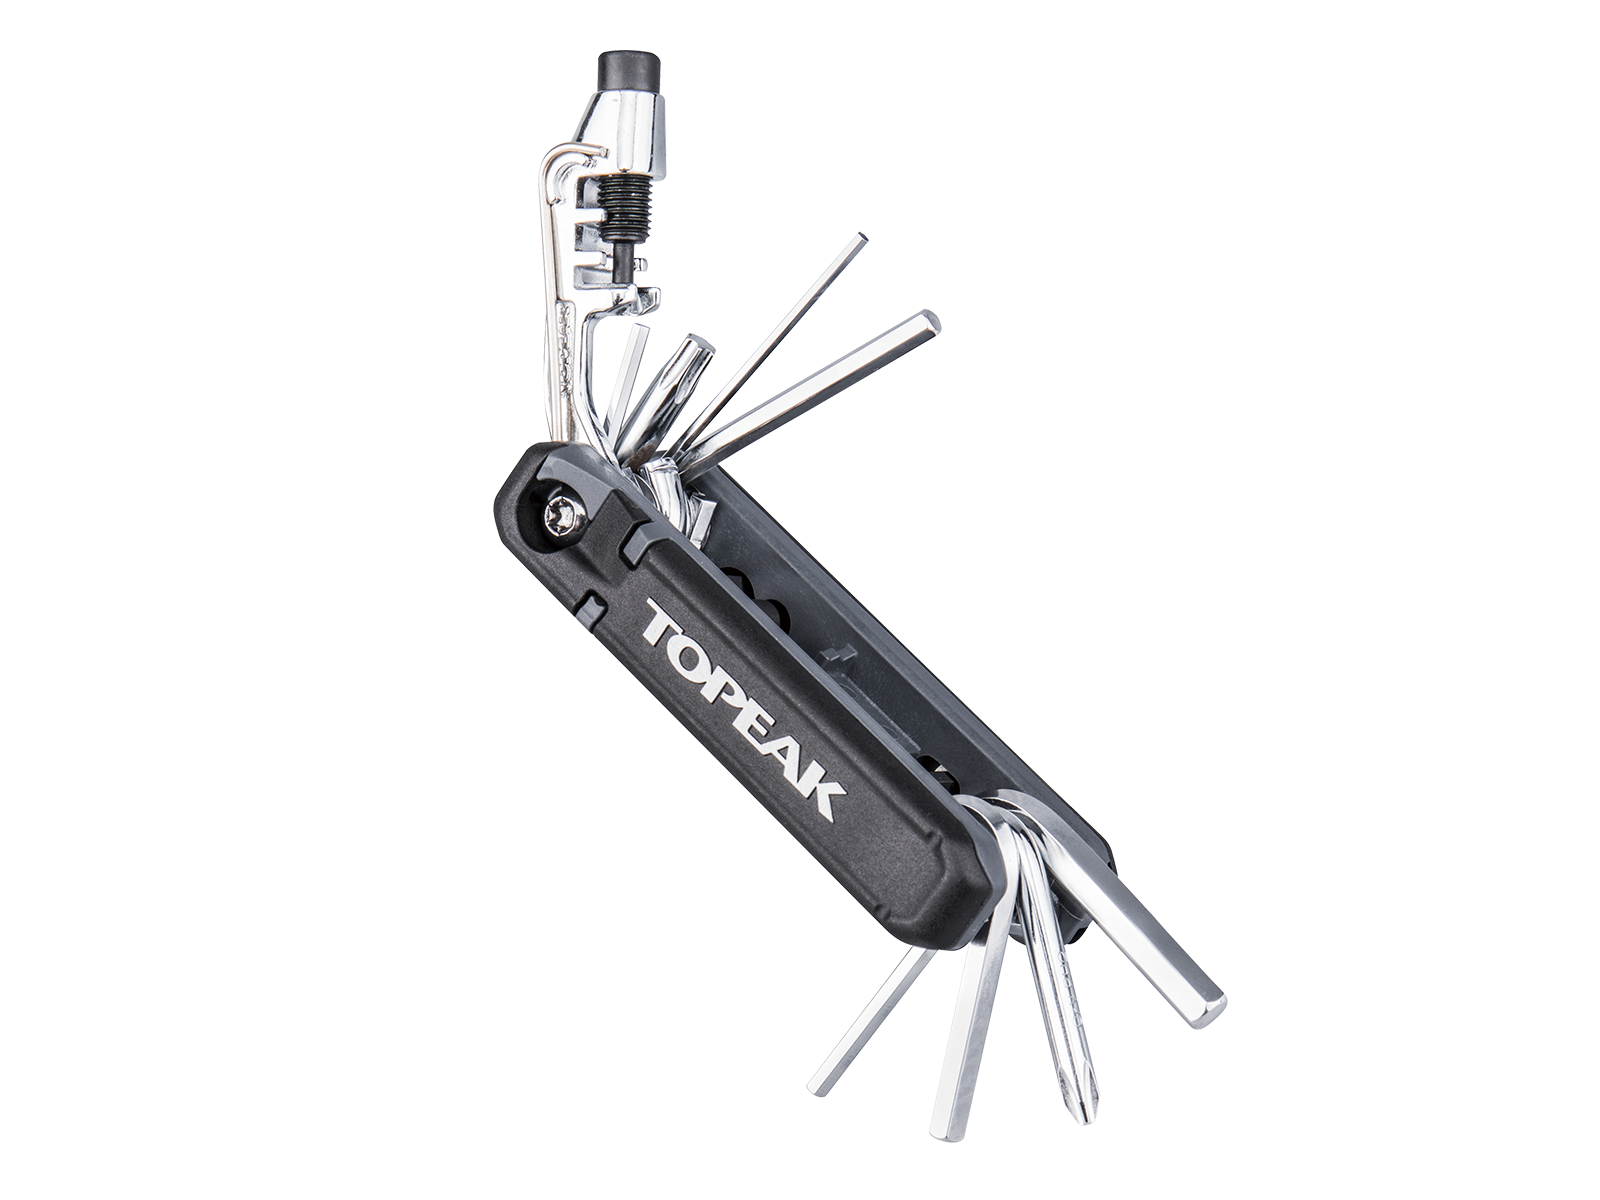  Bộ tool xe đạp Topeak HEXUS™ X 